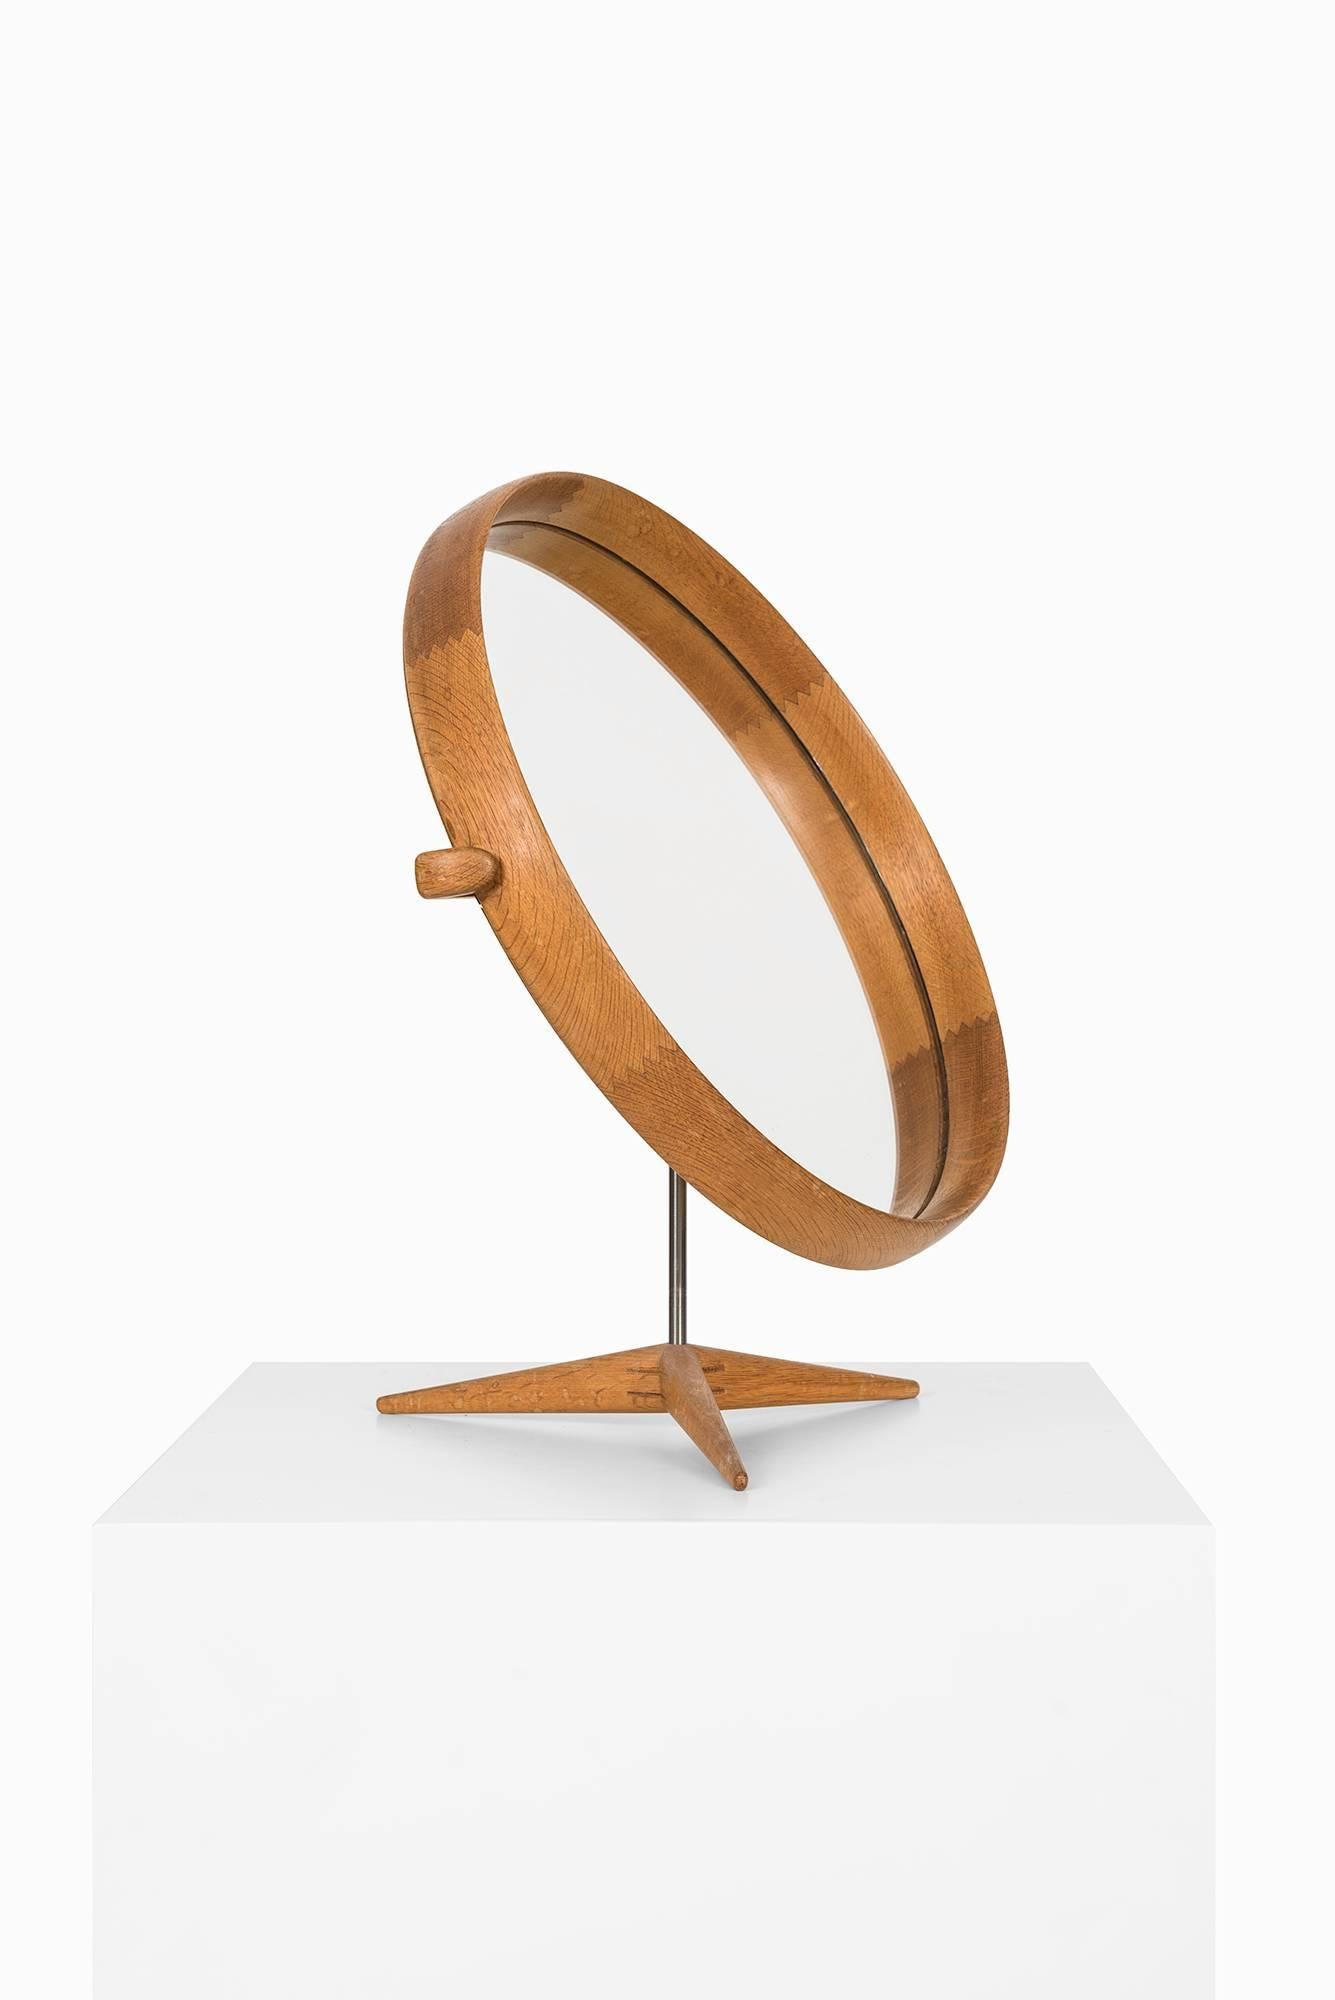 Rare table mirror designed by Uno & Östen Kristiansson. Produced by Luxus in Vittsjö, Sweden.